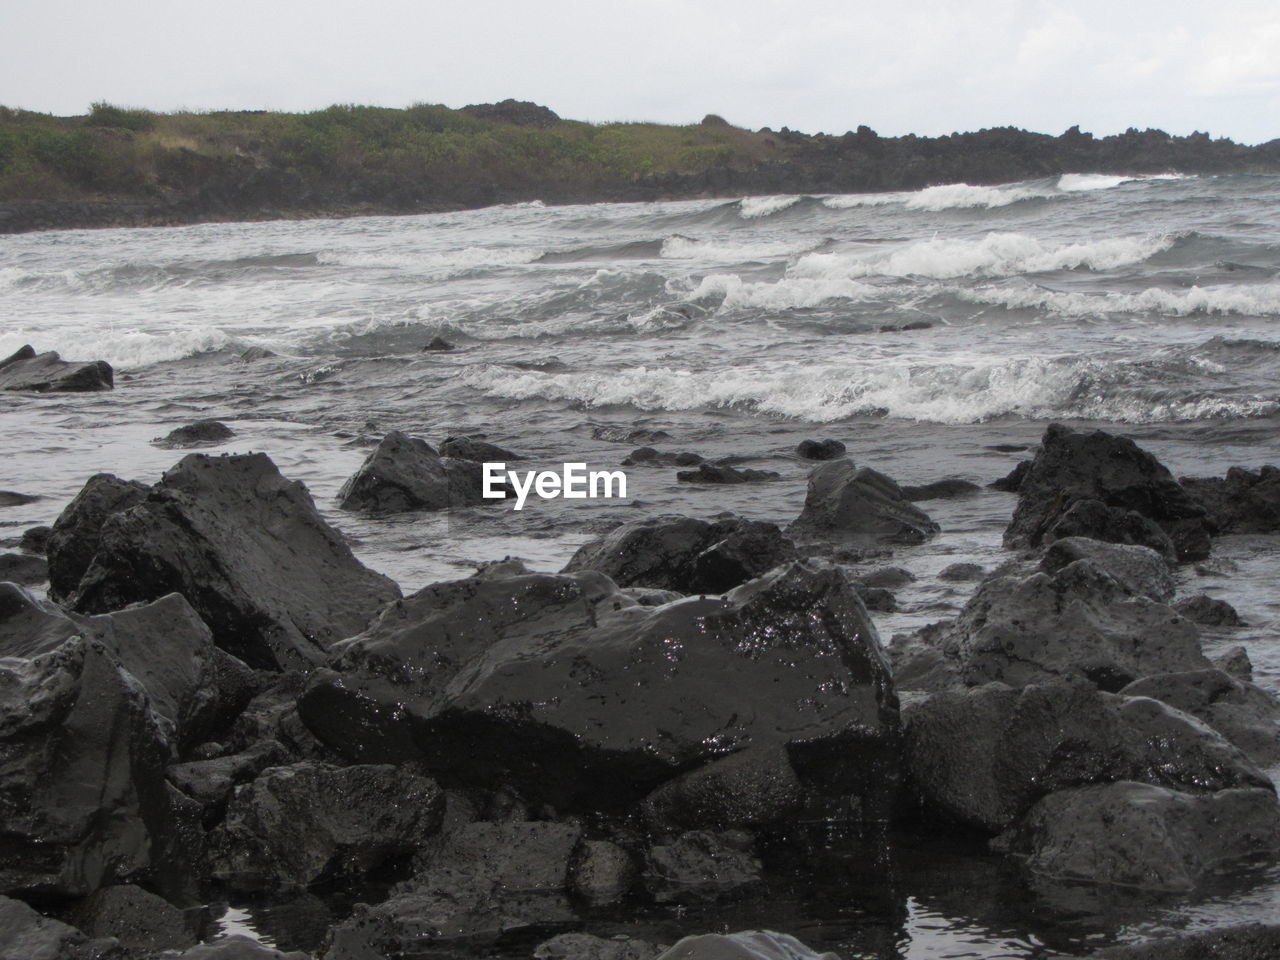 SCENIC VIEW OF ROCKS IN SEA AGAINST SKY